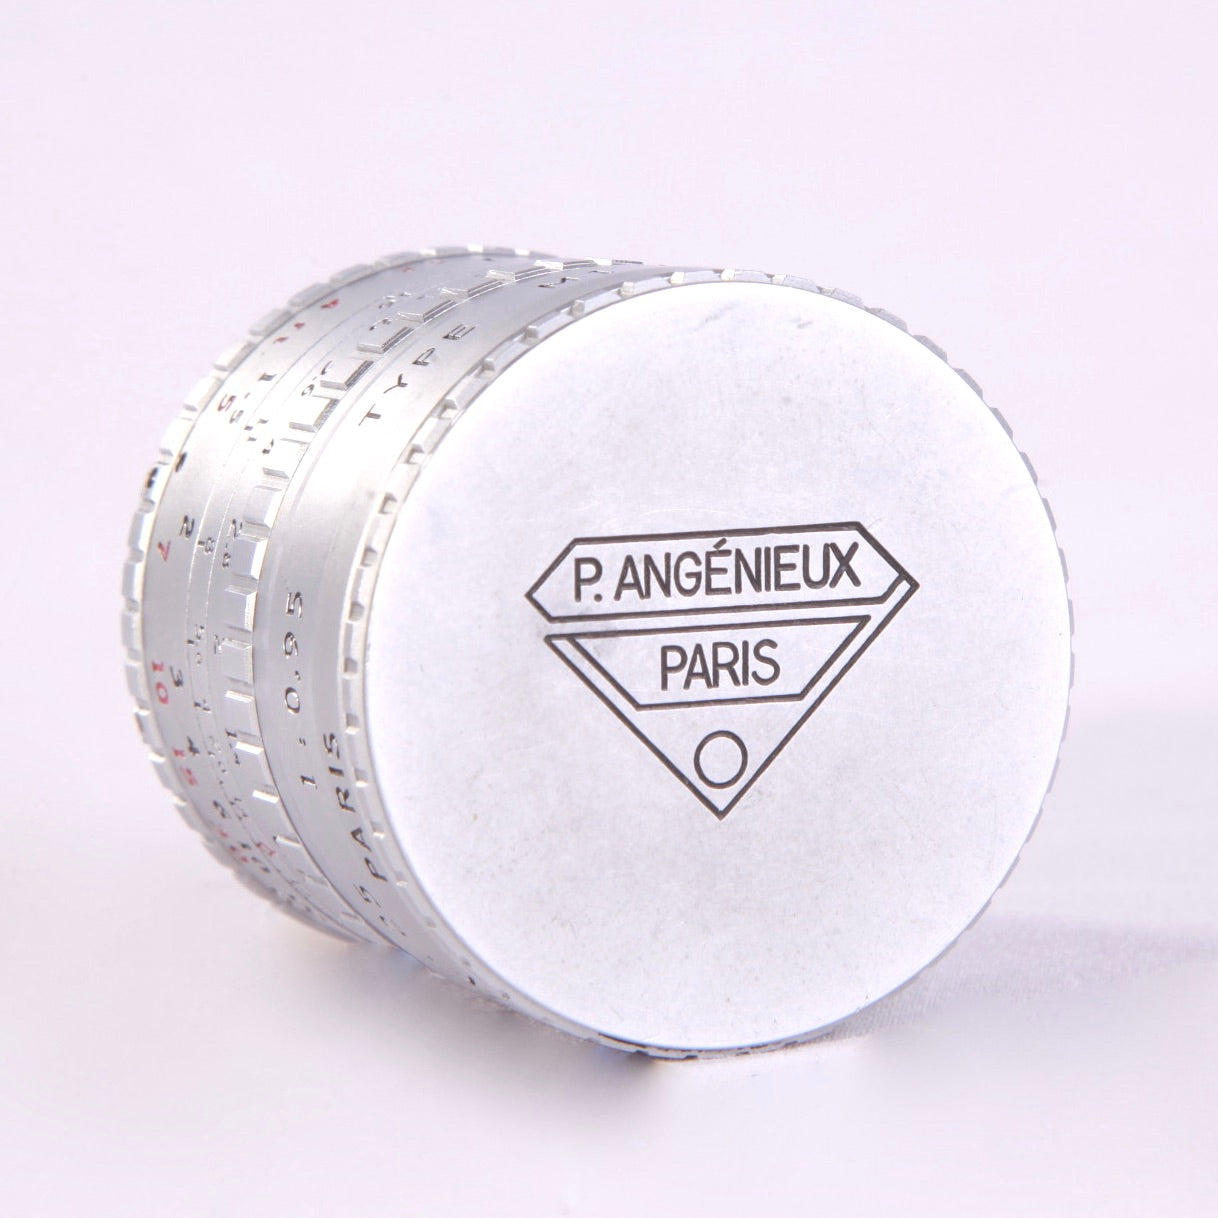 Angenieux 25mm f0.95 - c-mount lens